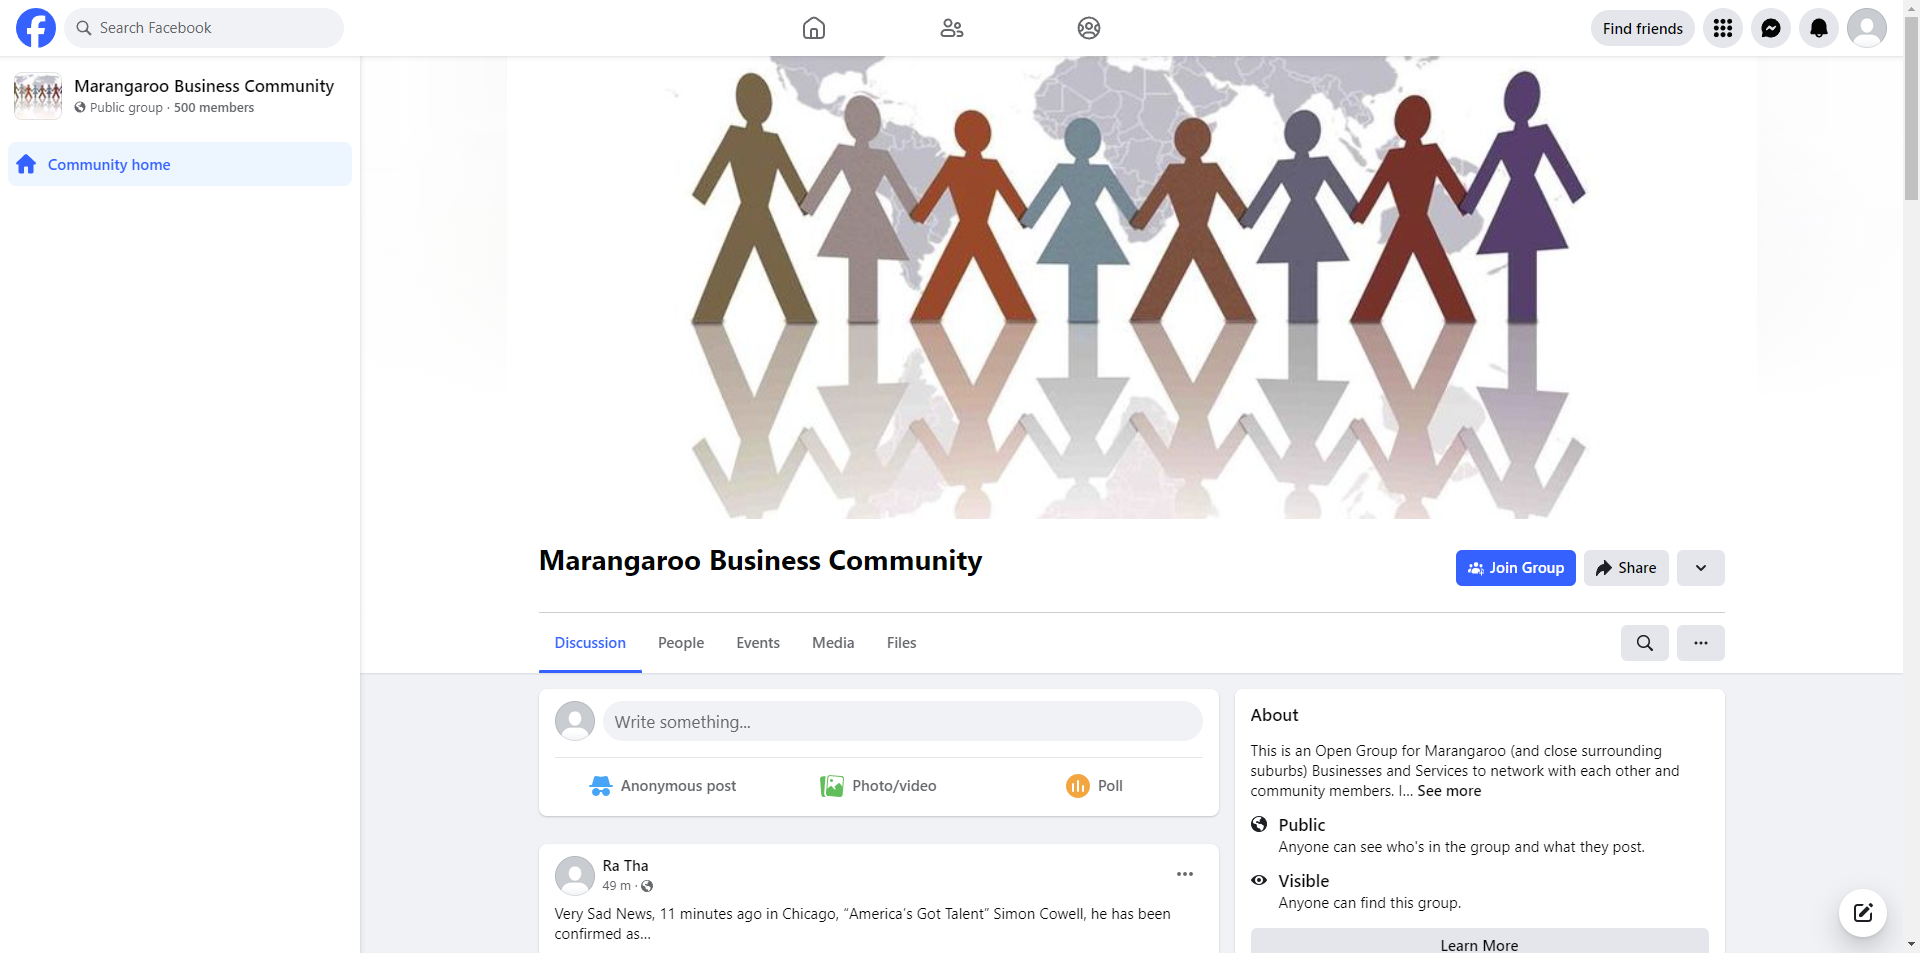 Marangaroo Business Community